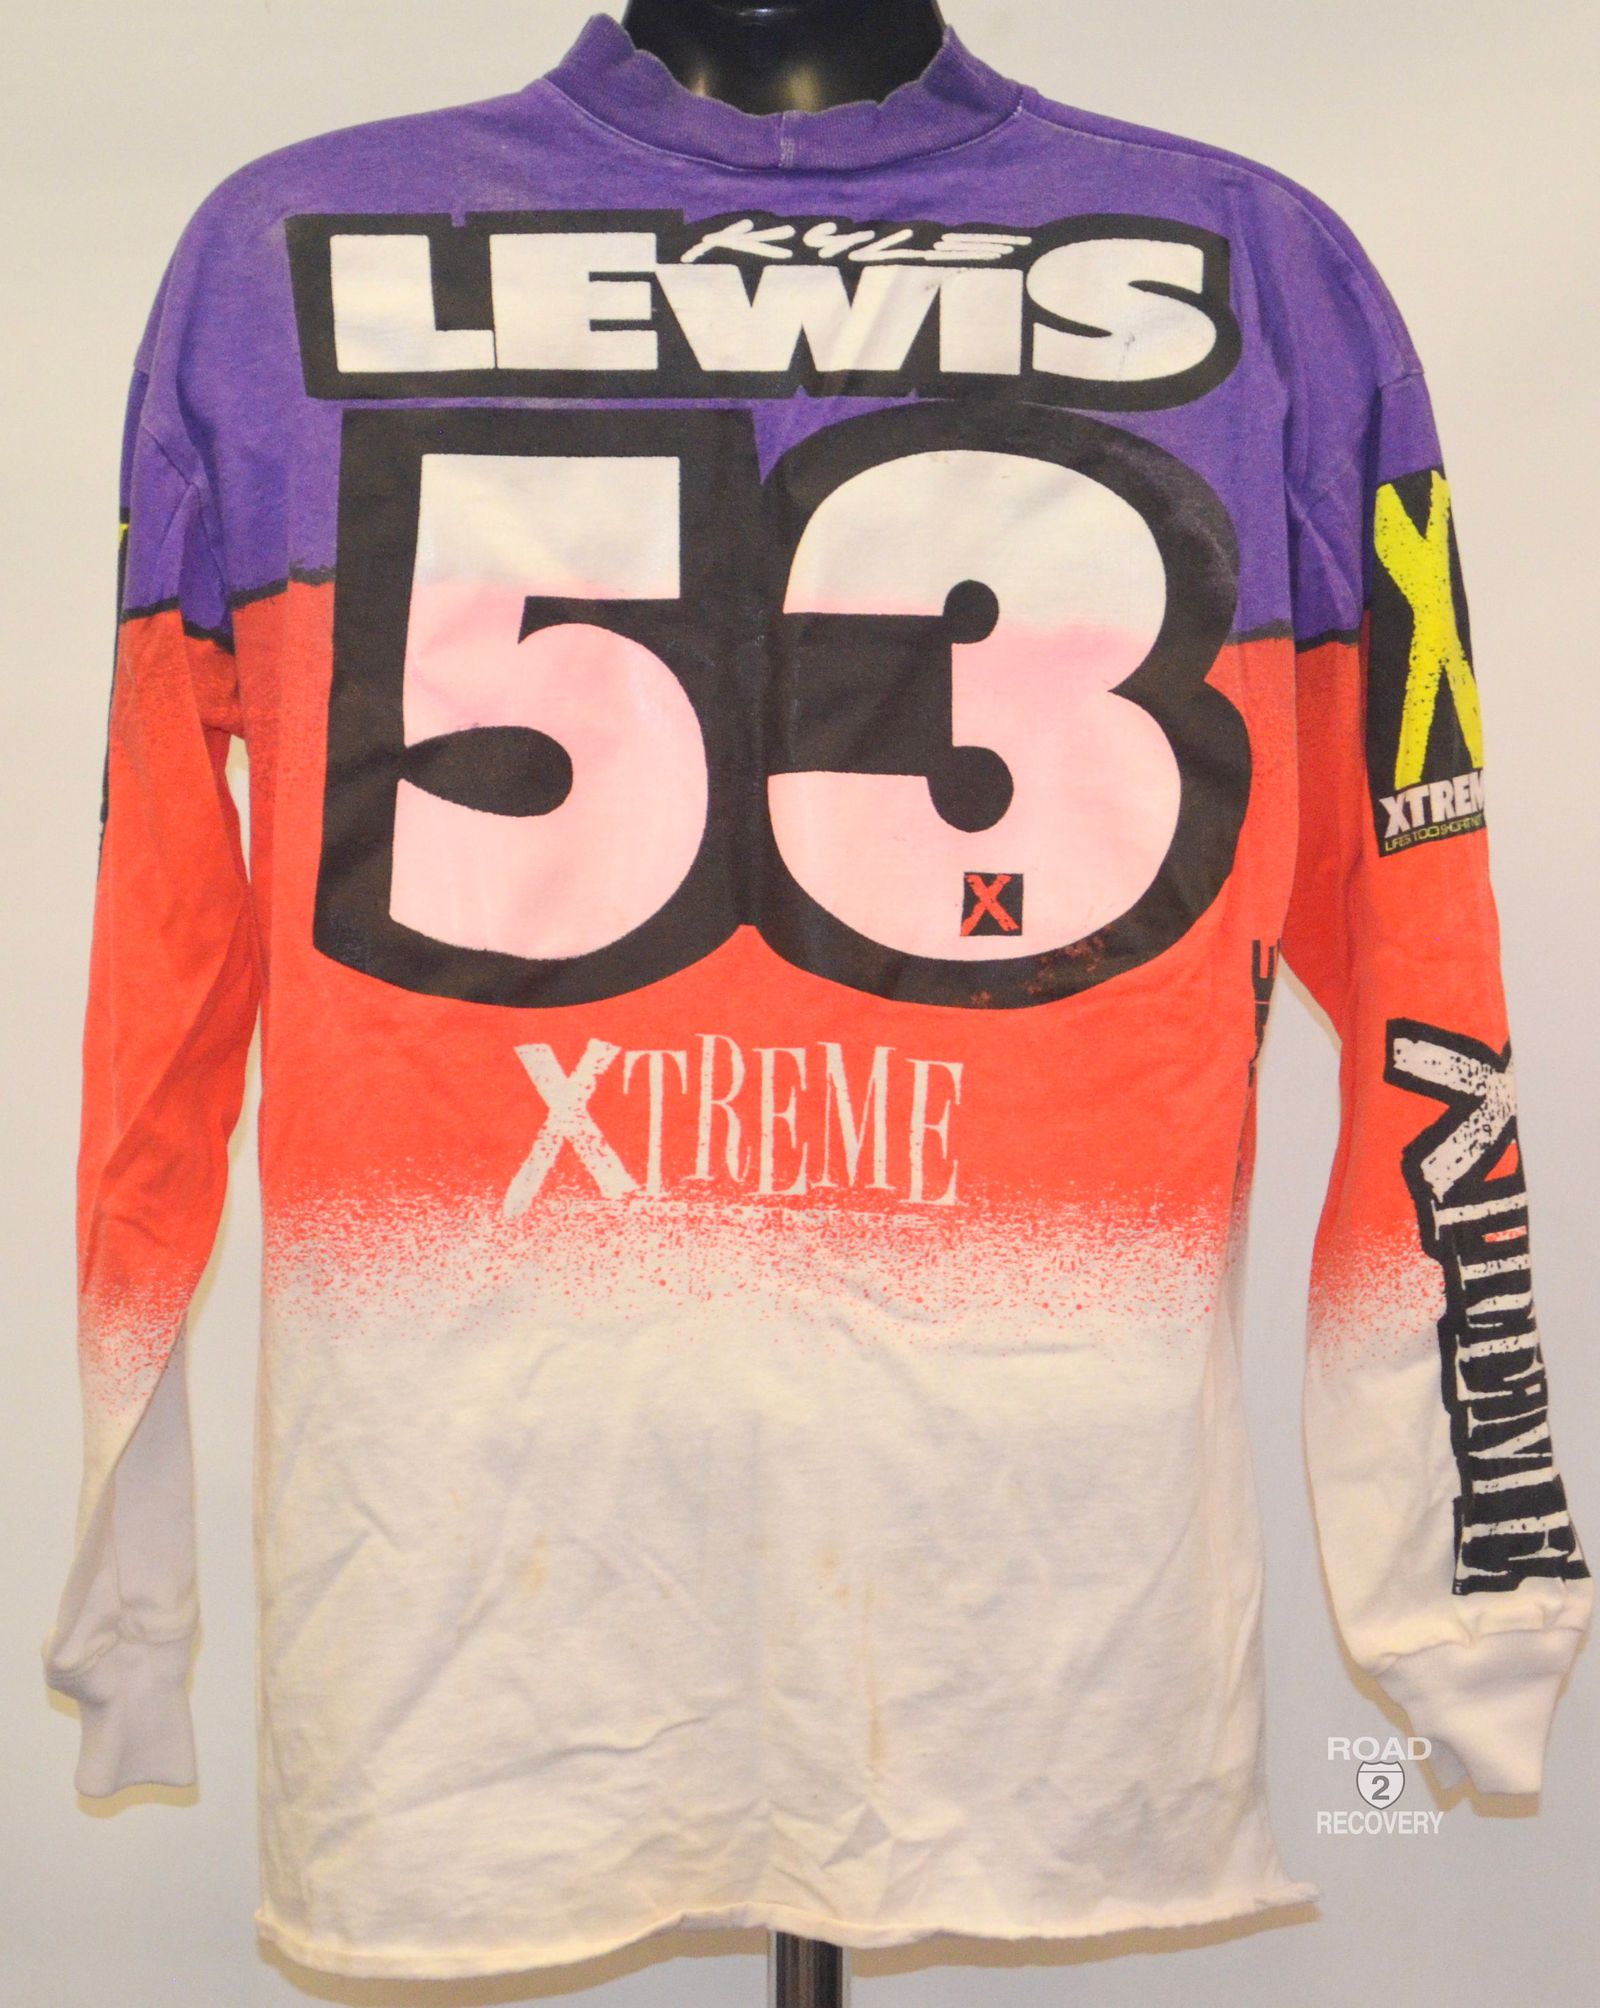 Kyle Lewis Autographed Race Worn XTREME Jersey